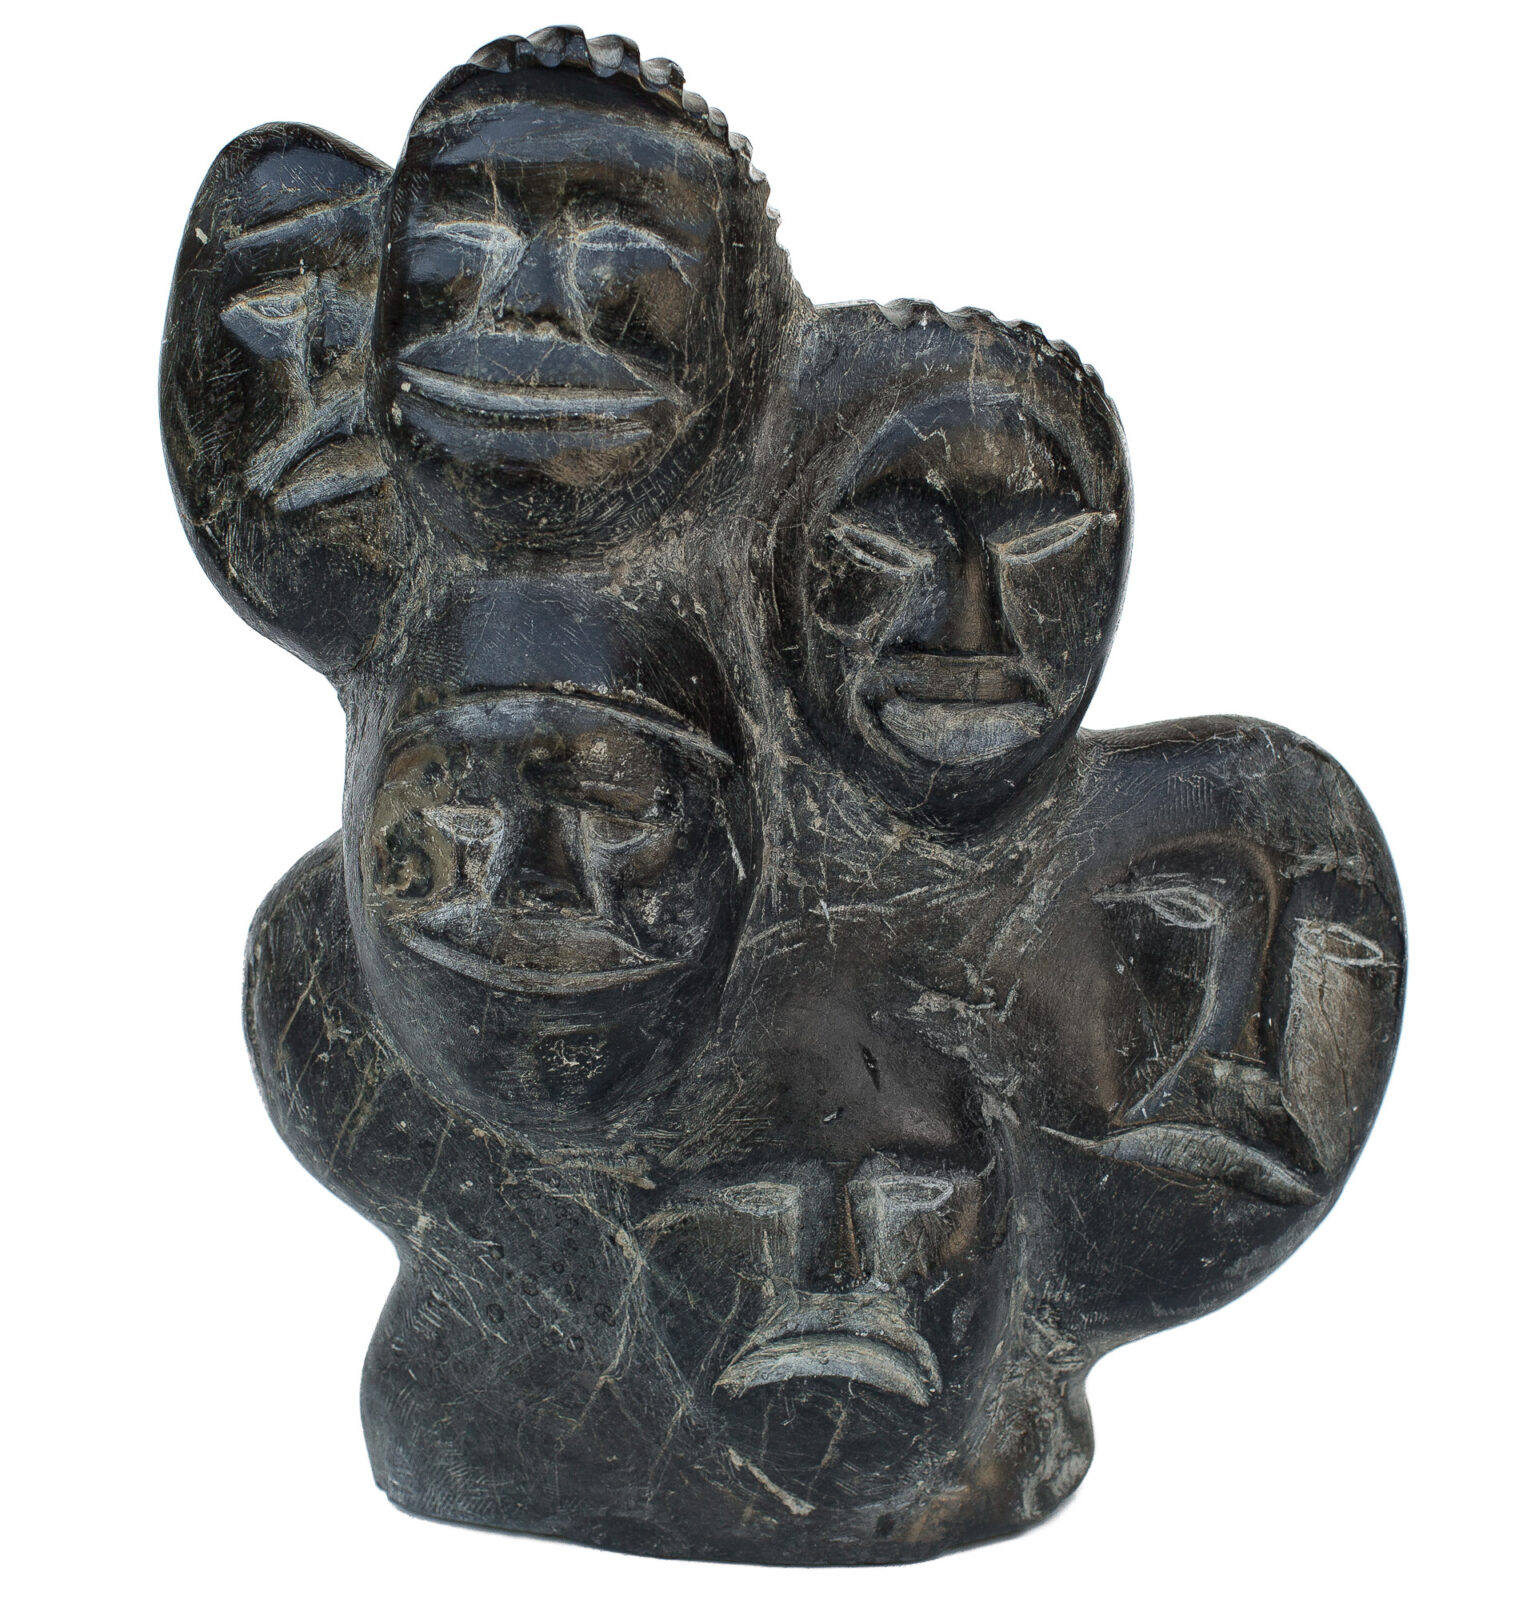 Silas Aittauq - untitled (head cluster)